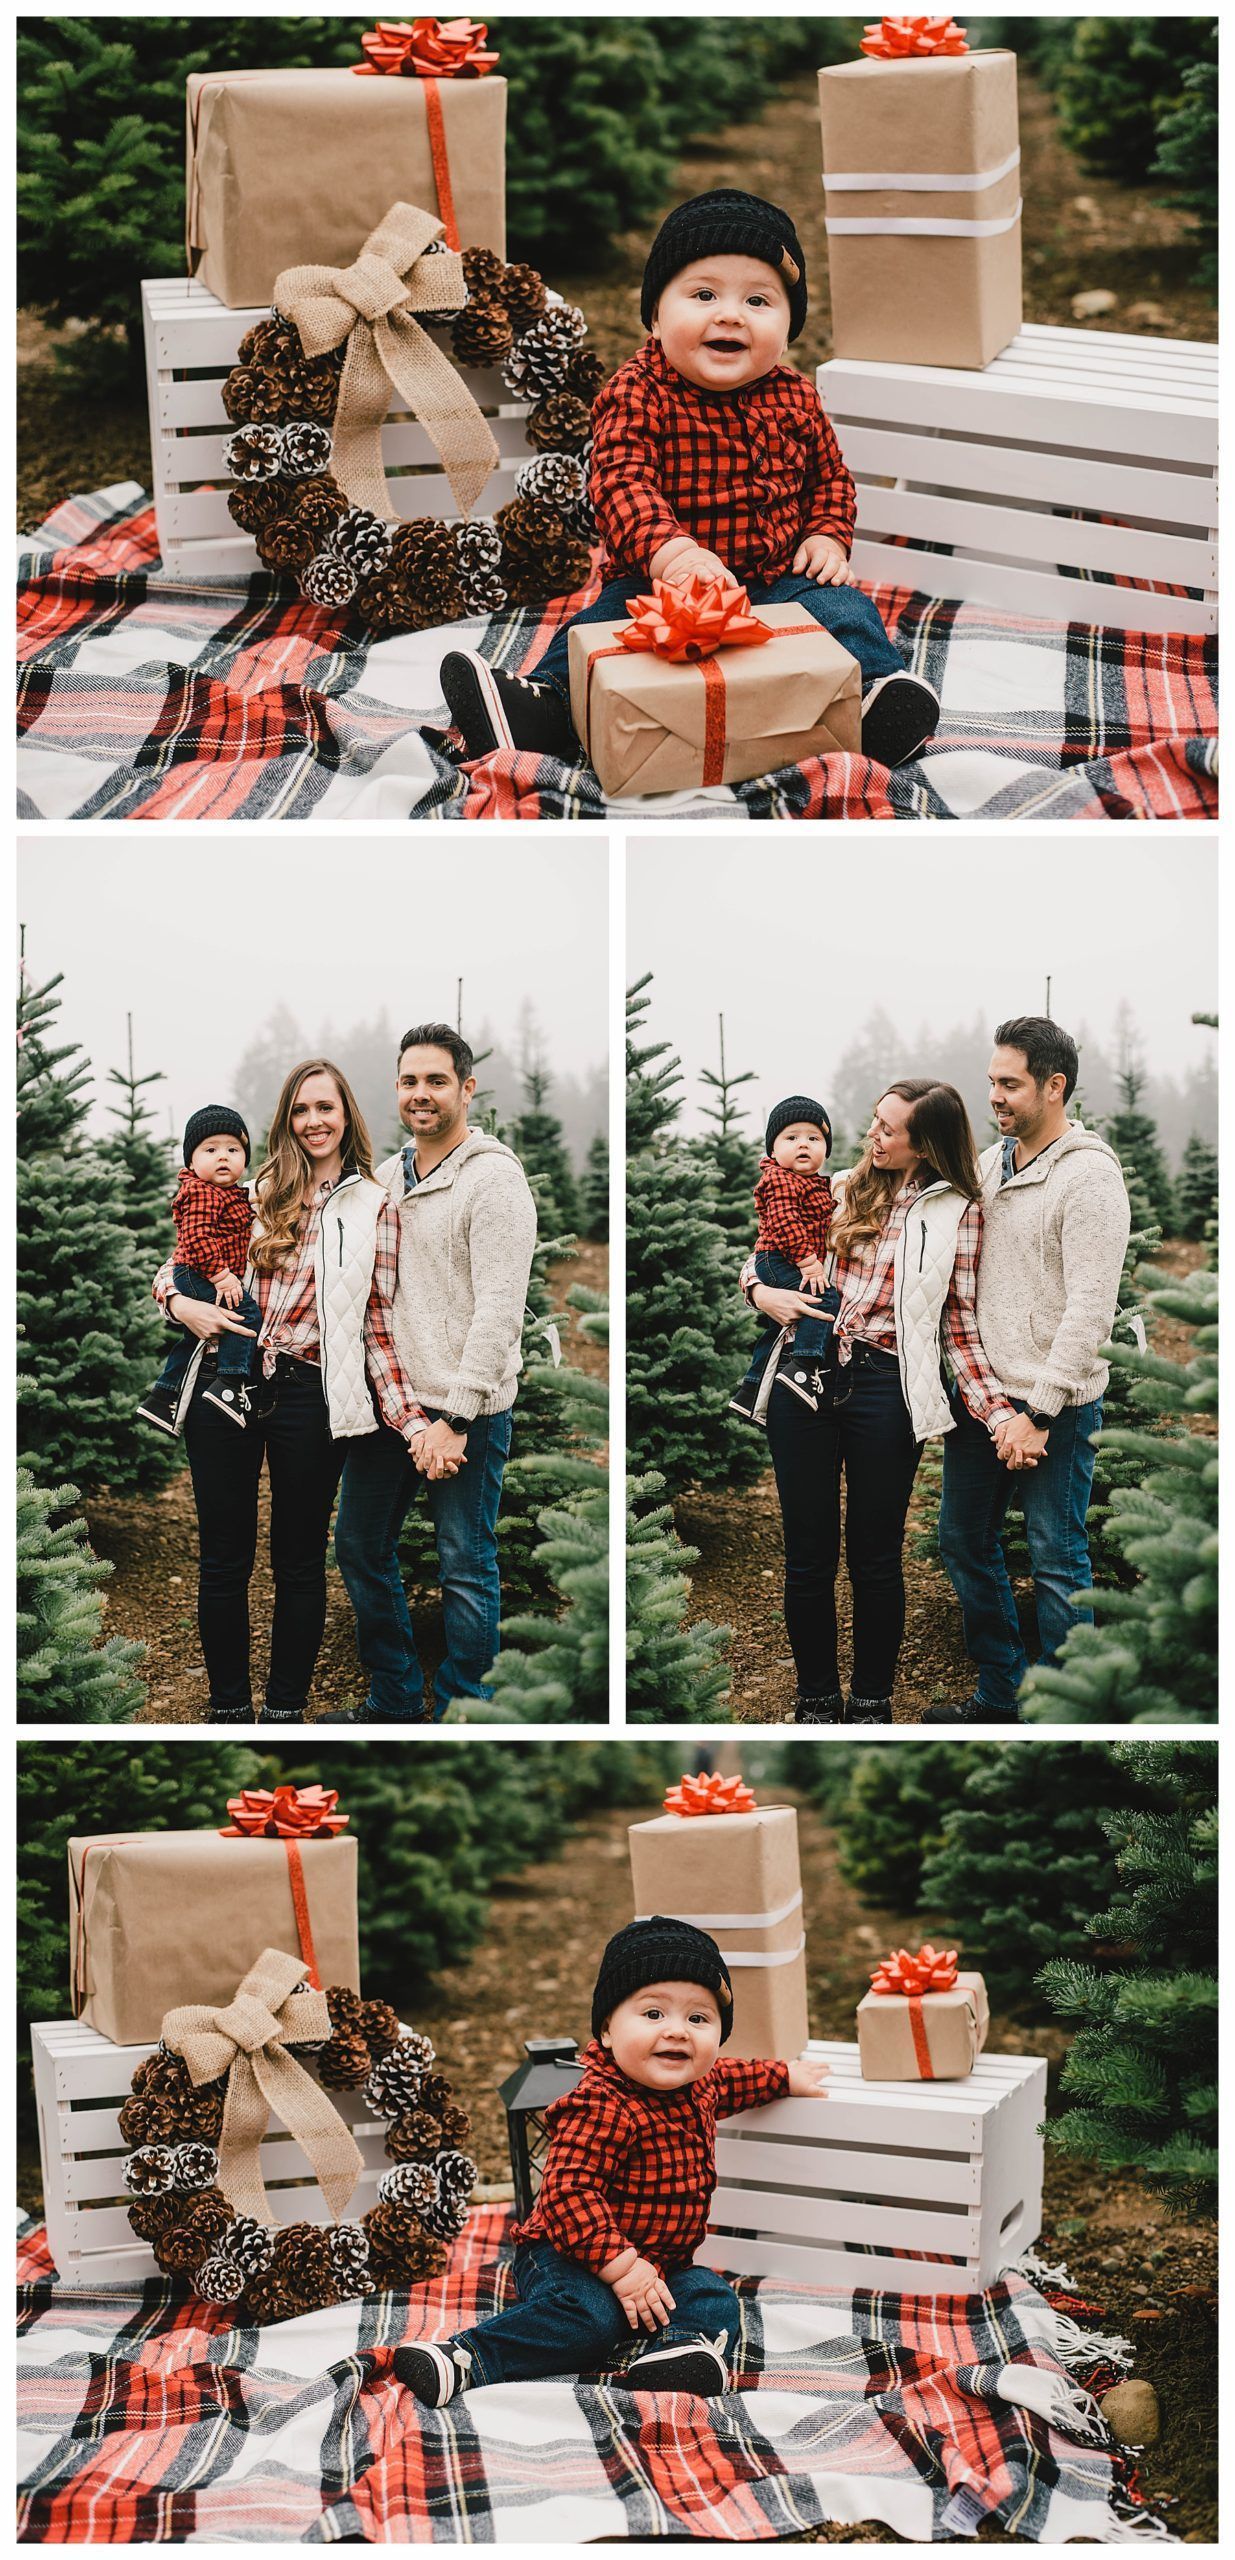 Kitsap County Couple Photographer | Hubert's Christmas Trees | Tree Farm mini sessions | Hernandez f -   21 christmas photoshoot family outdoor ideas